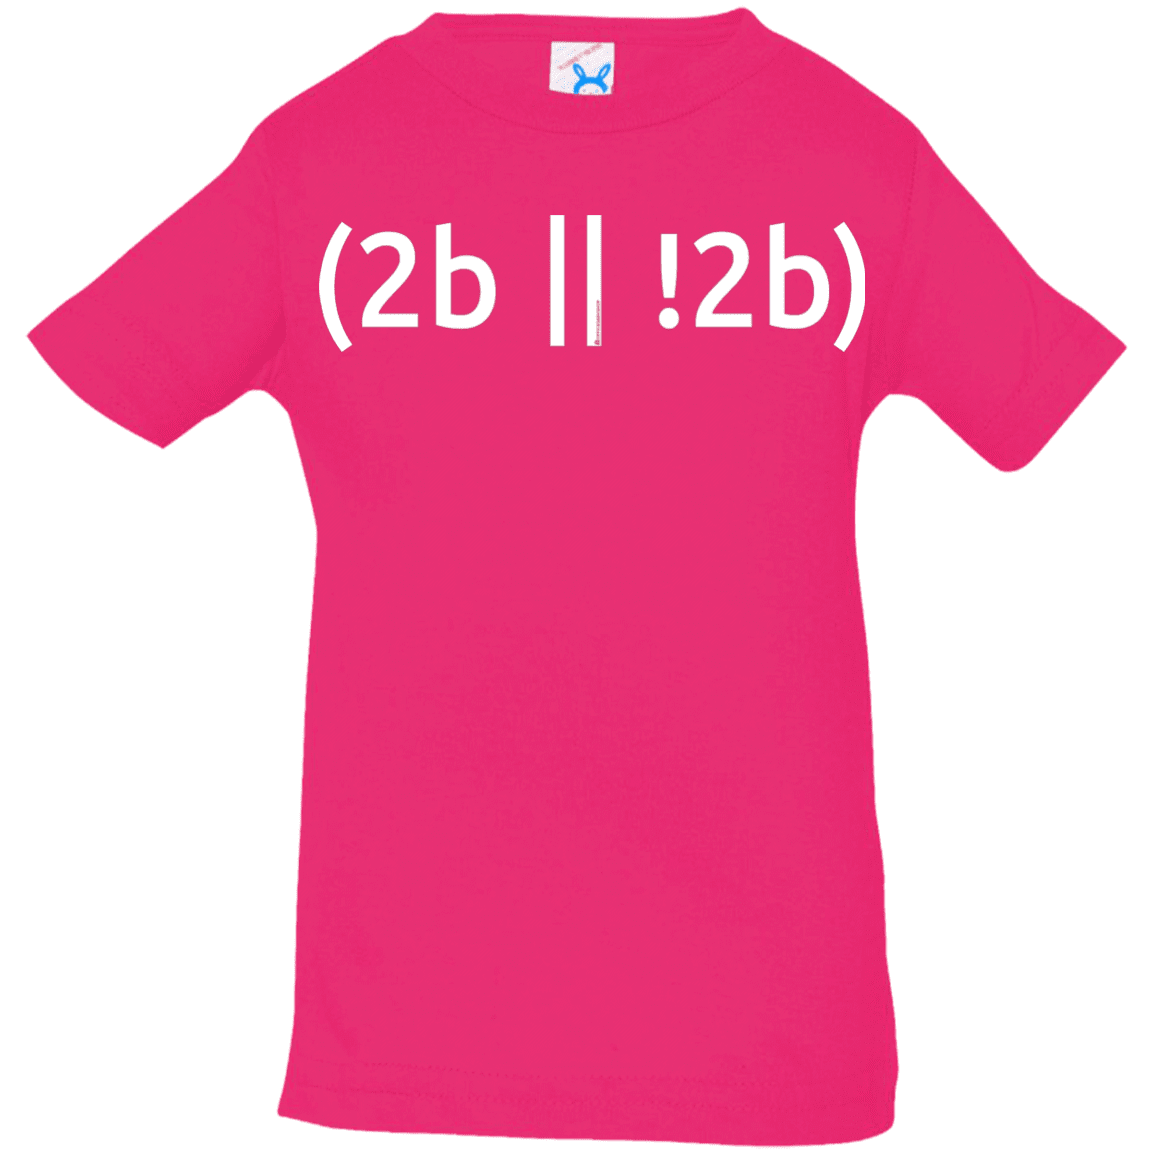 T-Shirts Hot Pink / 6 Months 2b Or Not 2b Infant Premium T-Shirt